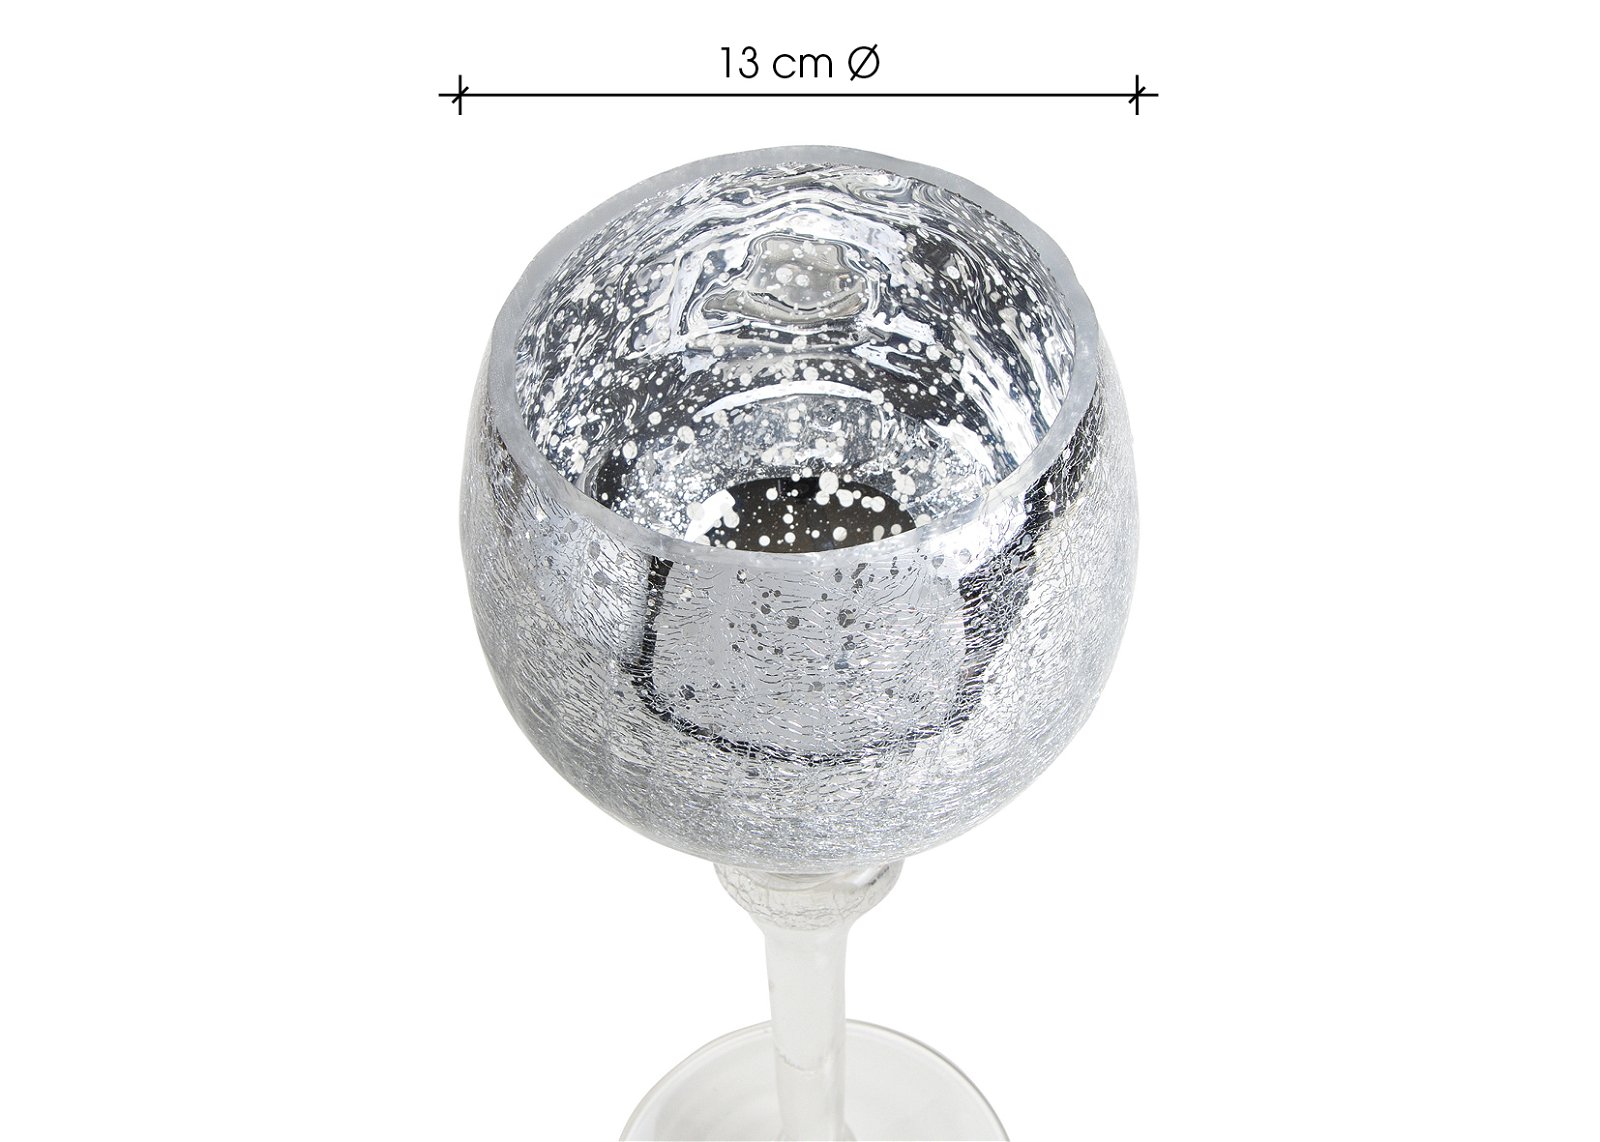 Vento luce set calice cracking argento 30, 35, 40cm x Ø13cm in vetro 3pcs,